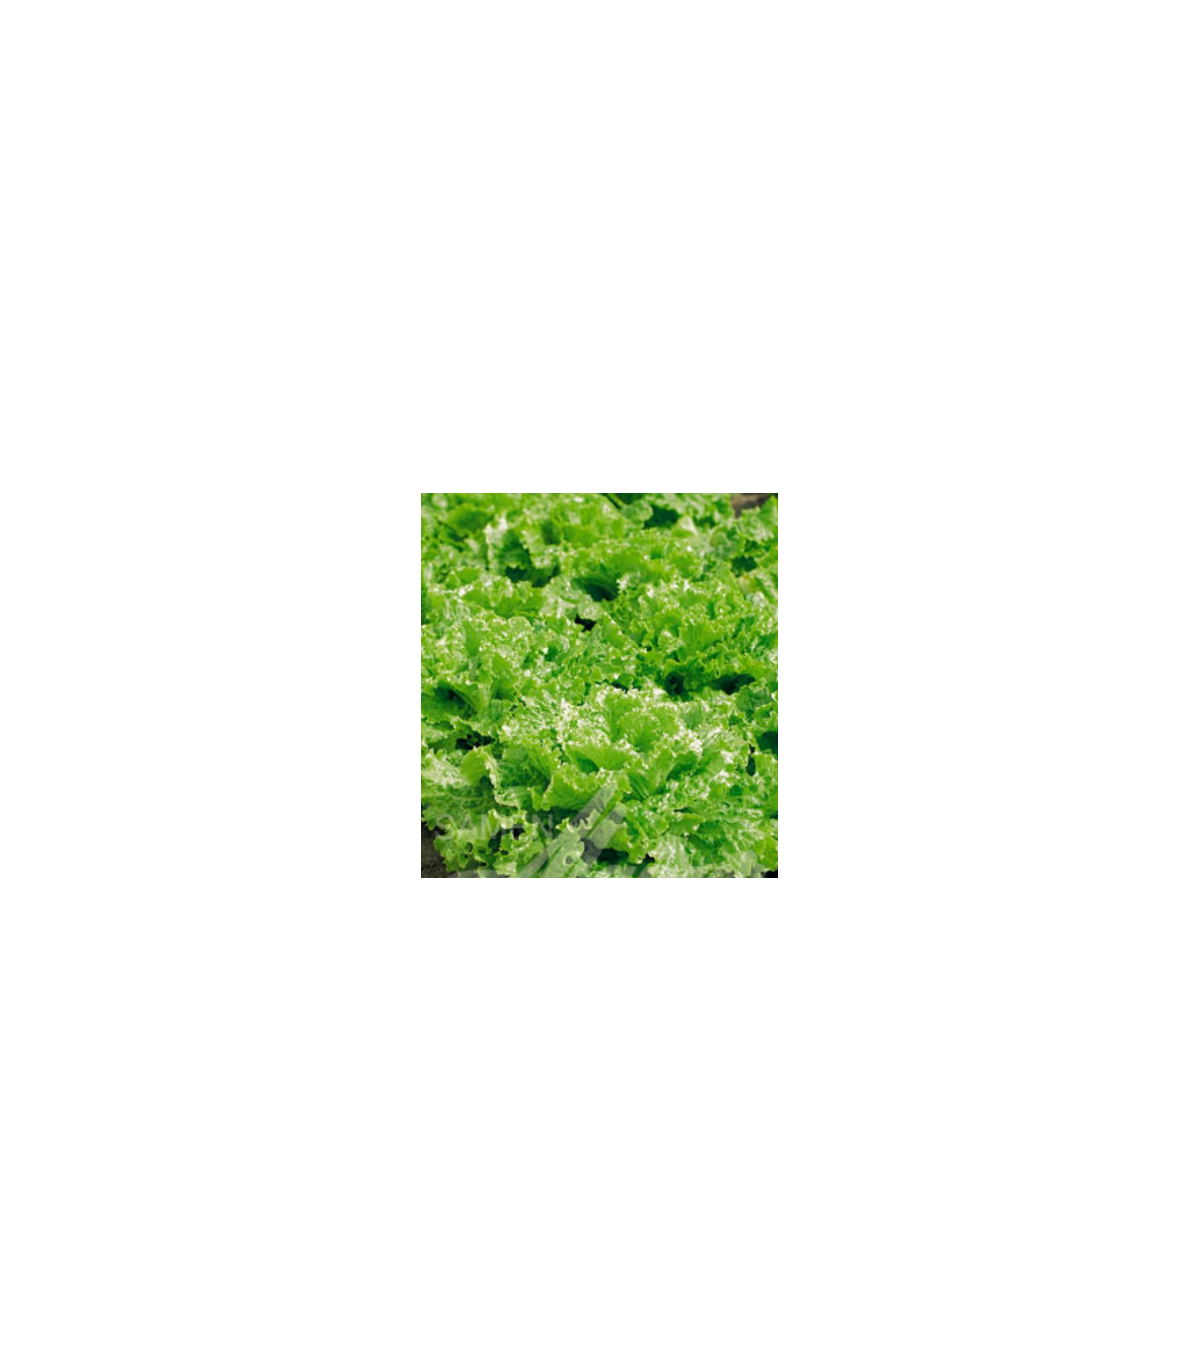 Salát k česání - semena Salátu - Lactusa sativa - 1 gr